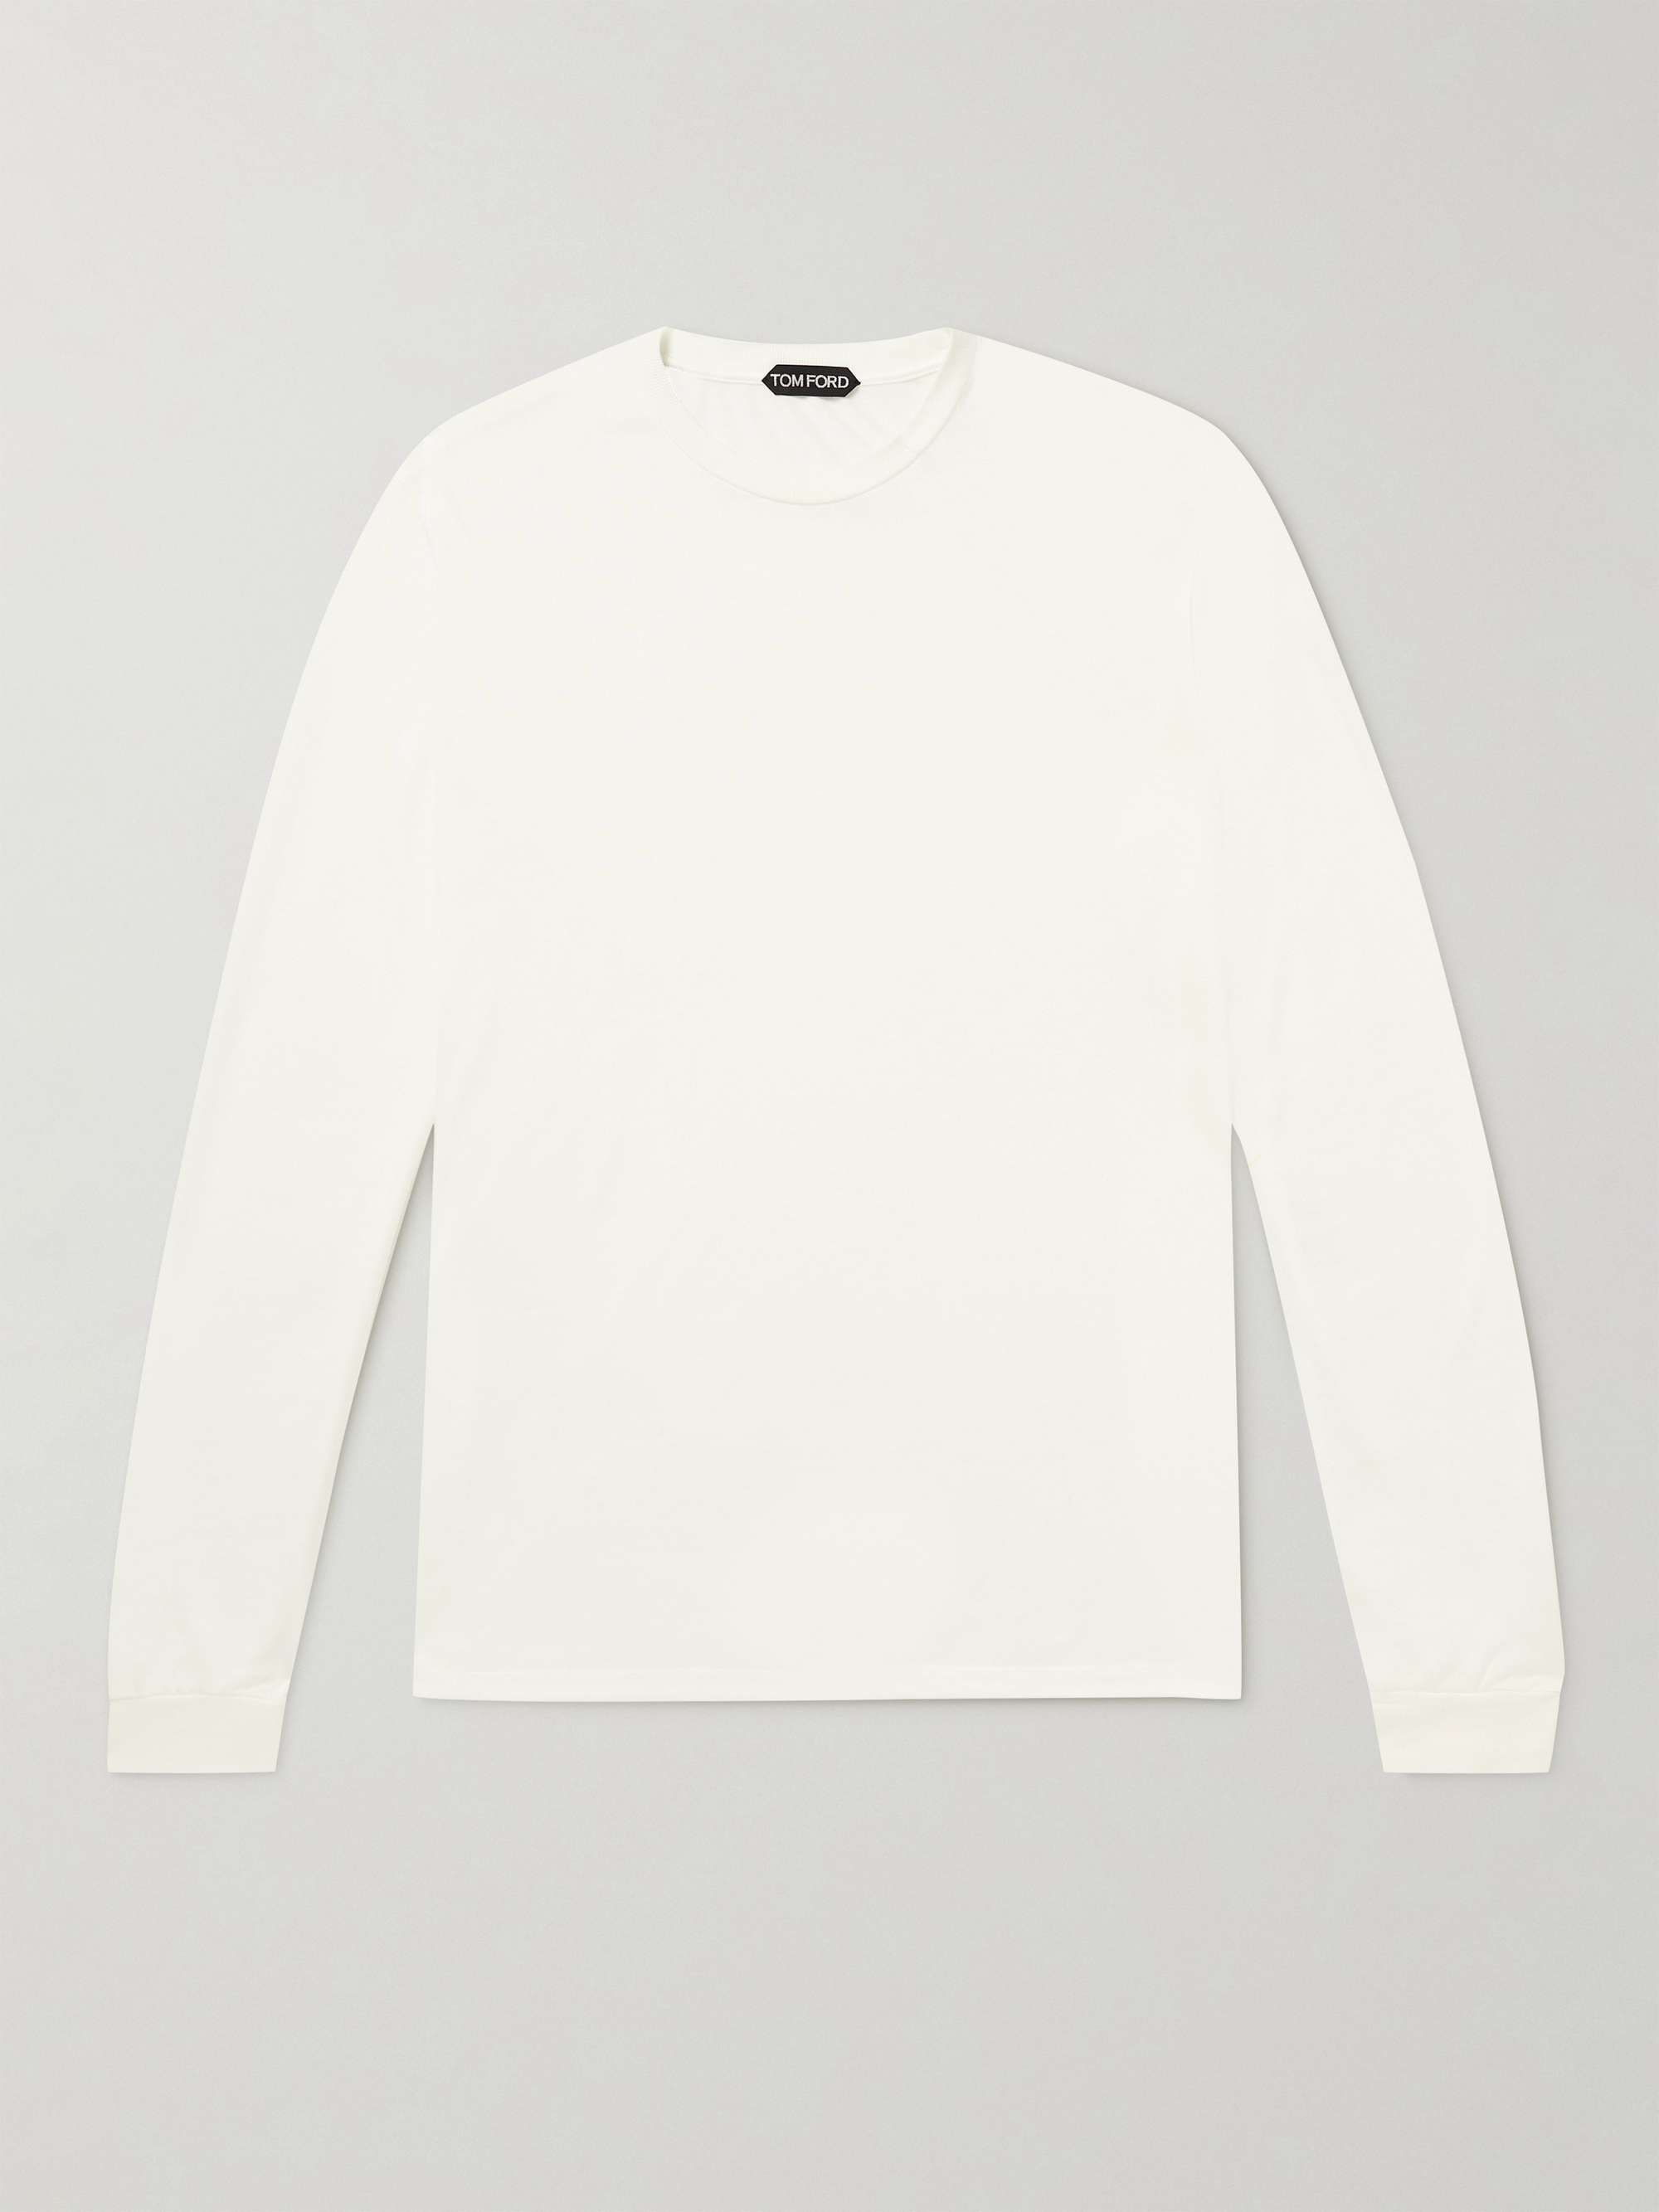 White Lyocell and Cotton-Blend T-Shirt | TOM FORD | MR PORTER